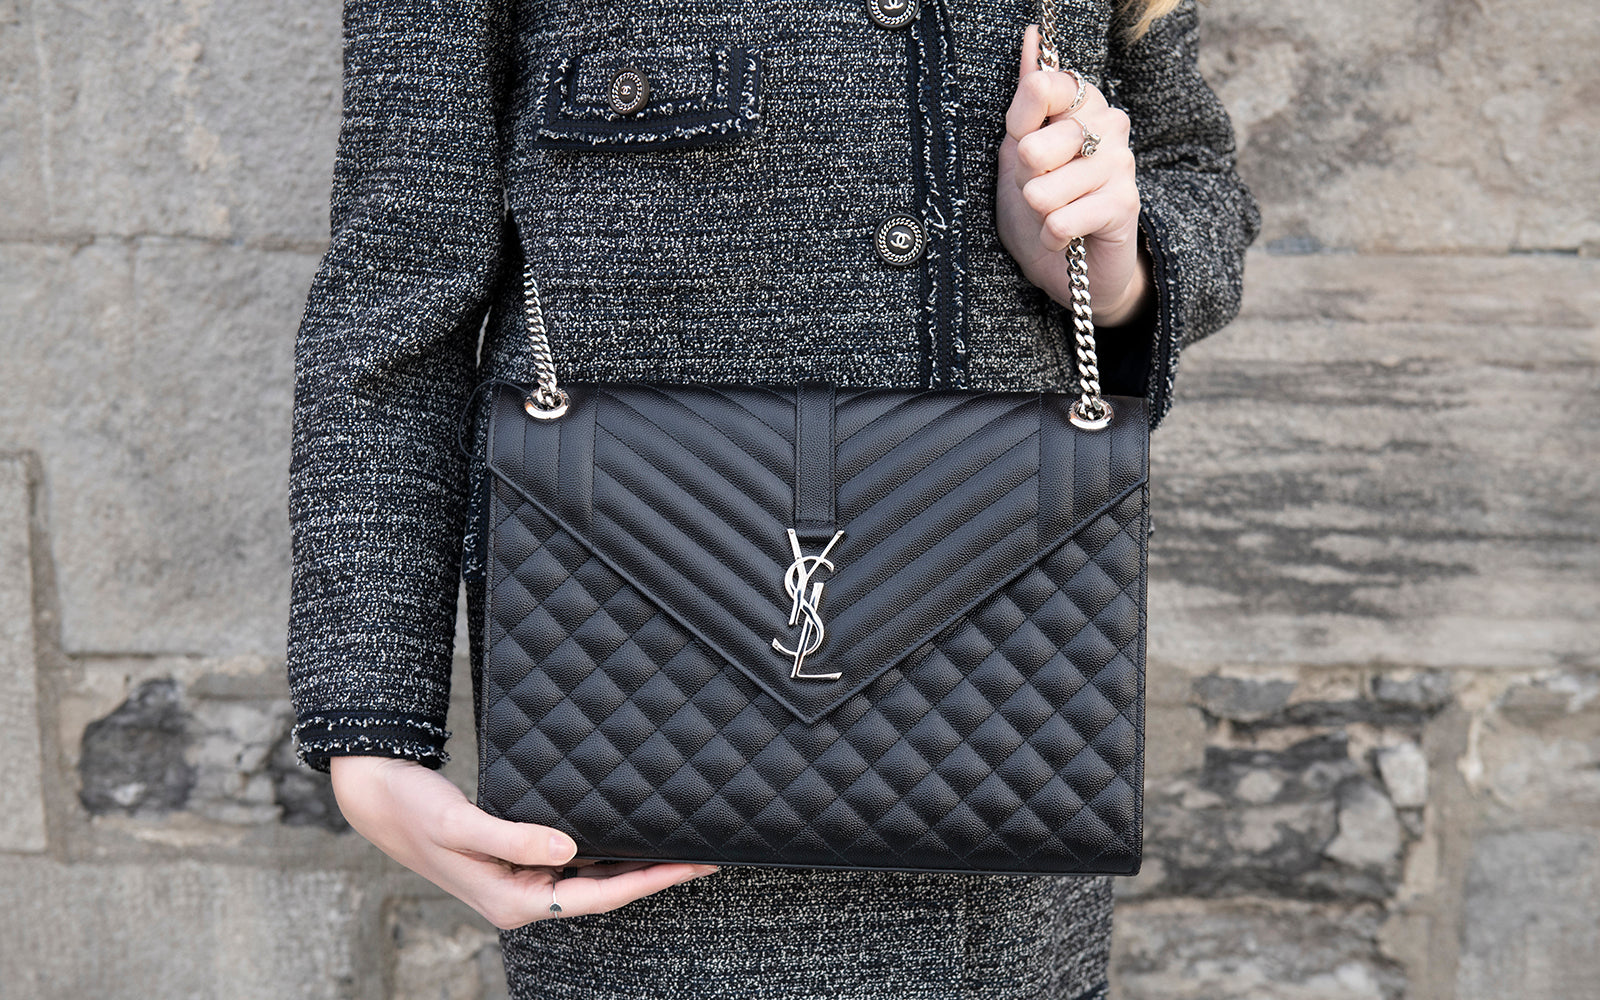 Learn how to authenticate Saint Laurent handbags